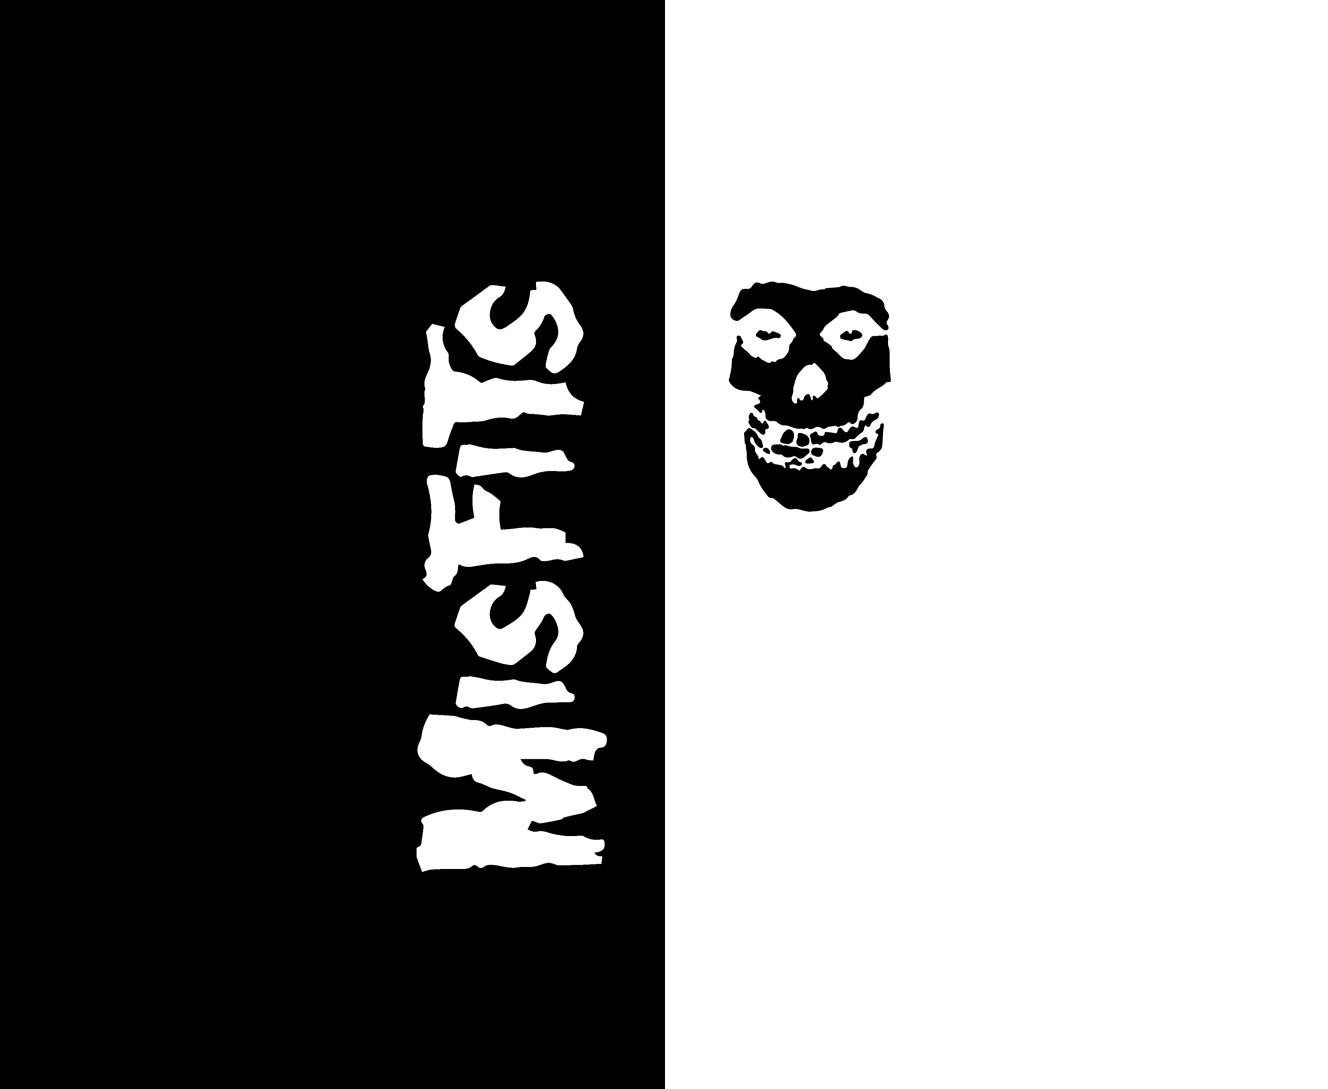 MISFITS [14]